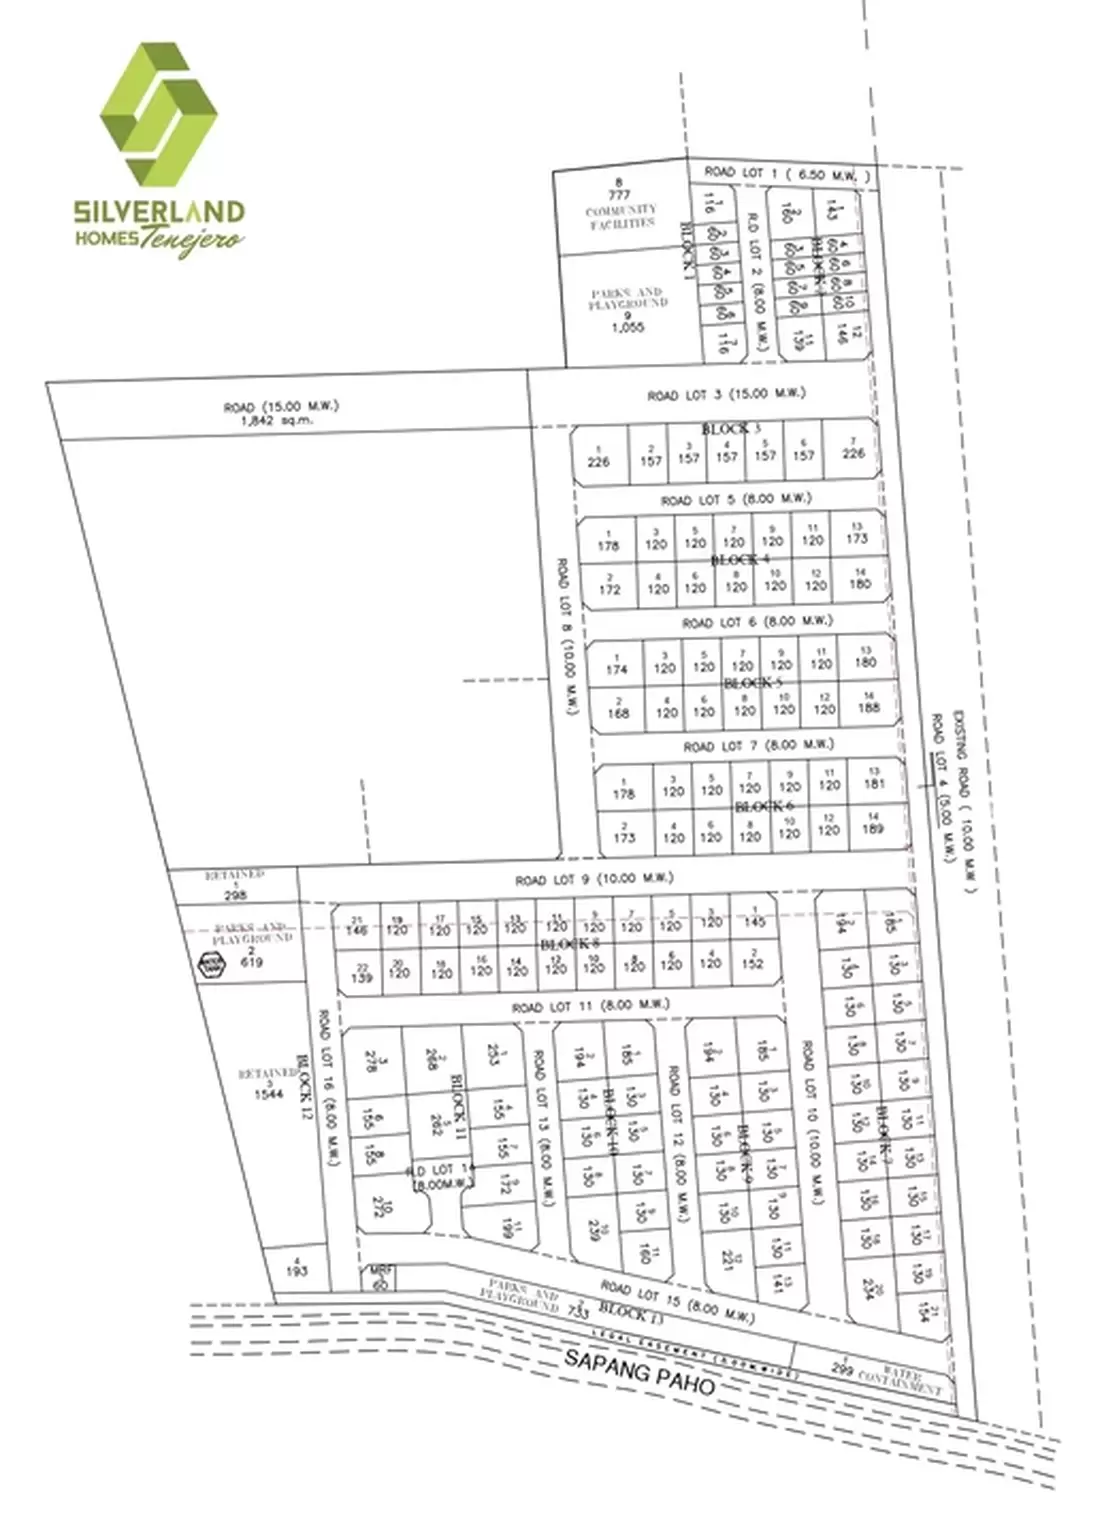 Silverland Homes Tenejero-site development plan